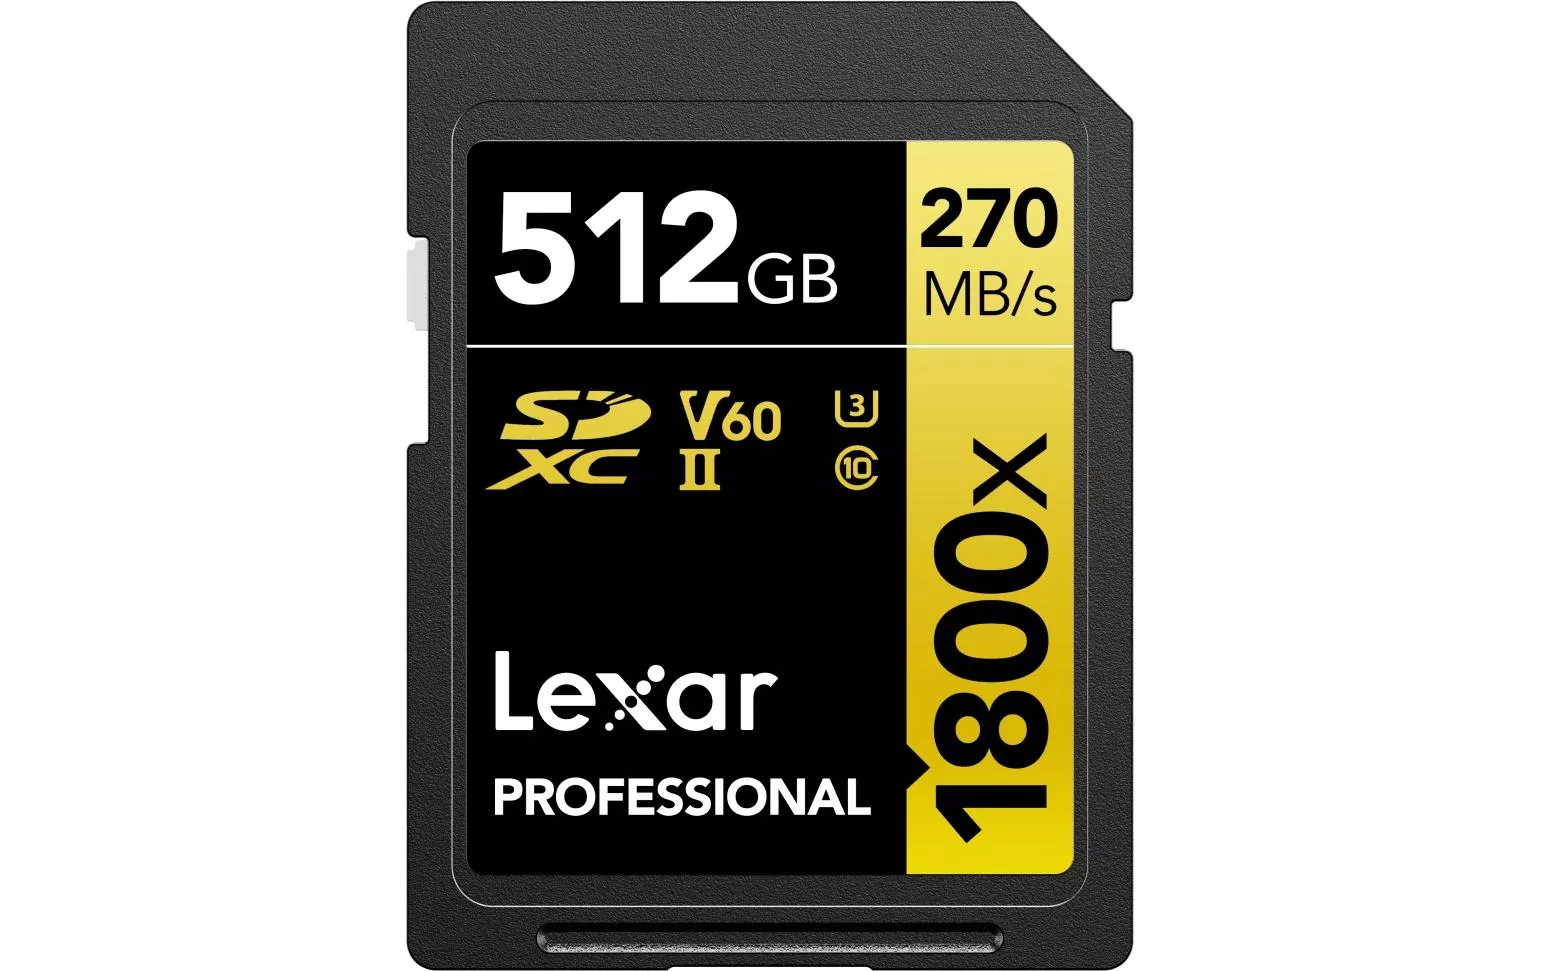 Carte SDXC Professional 1800x Gold Series 512 GB